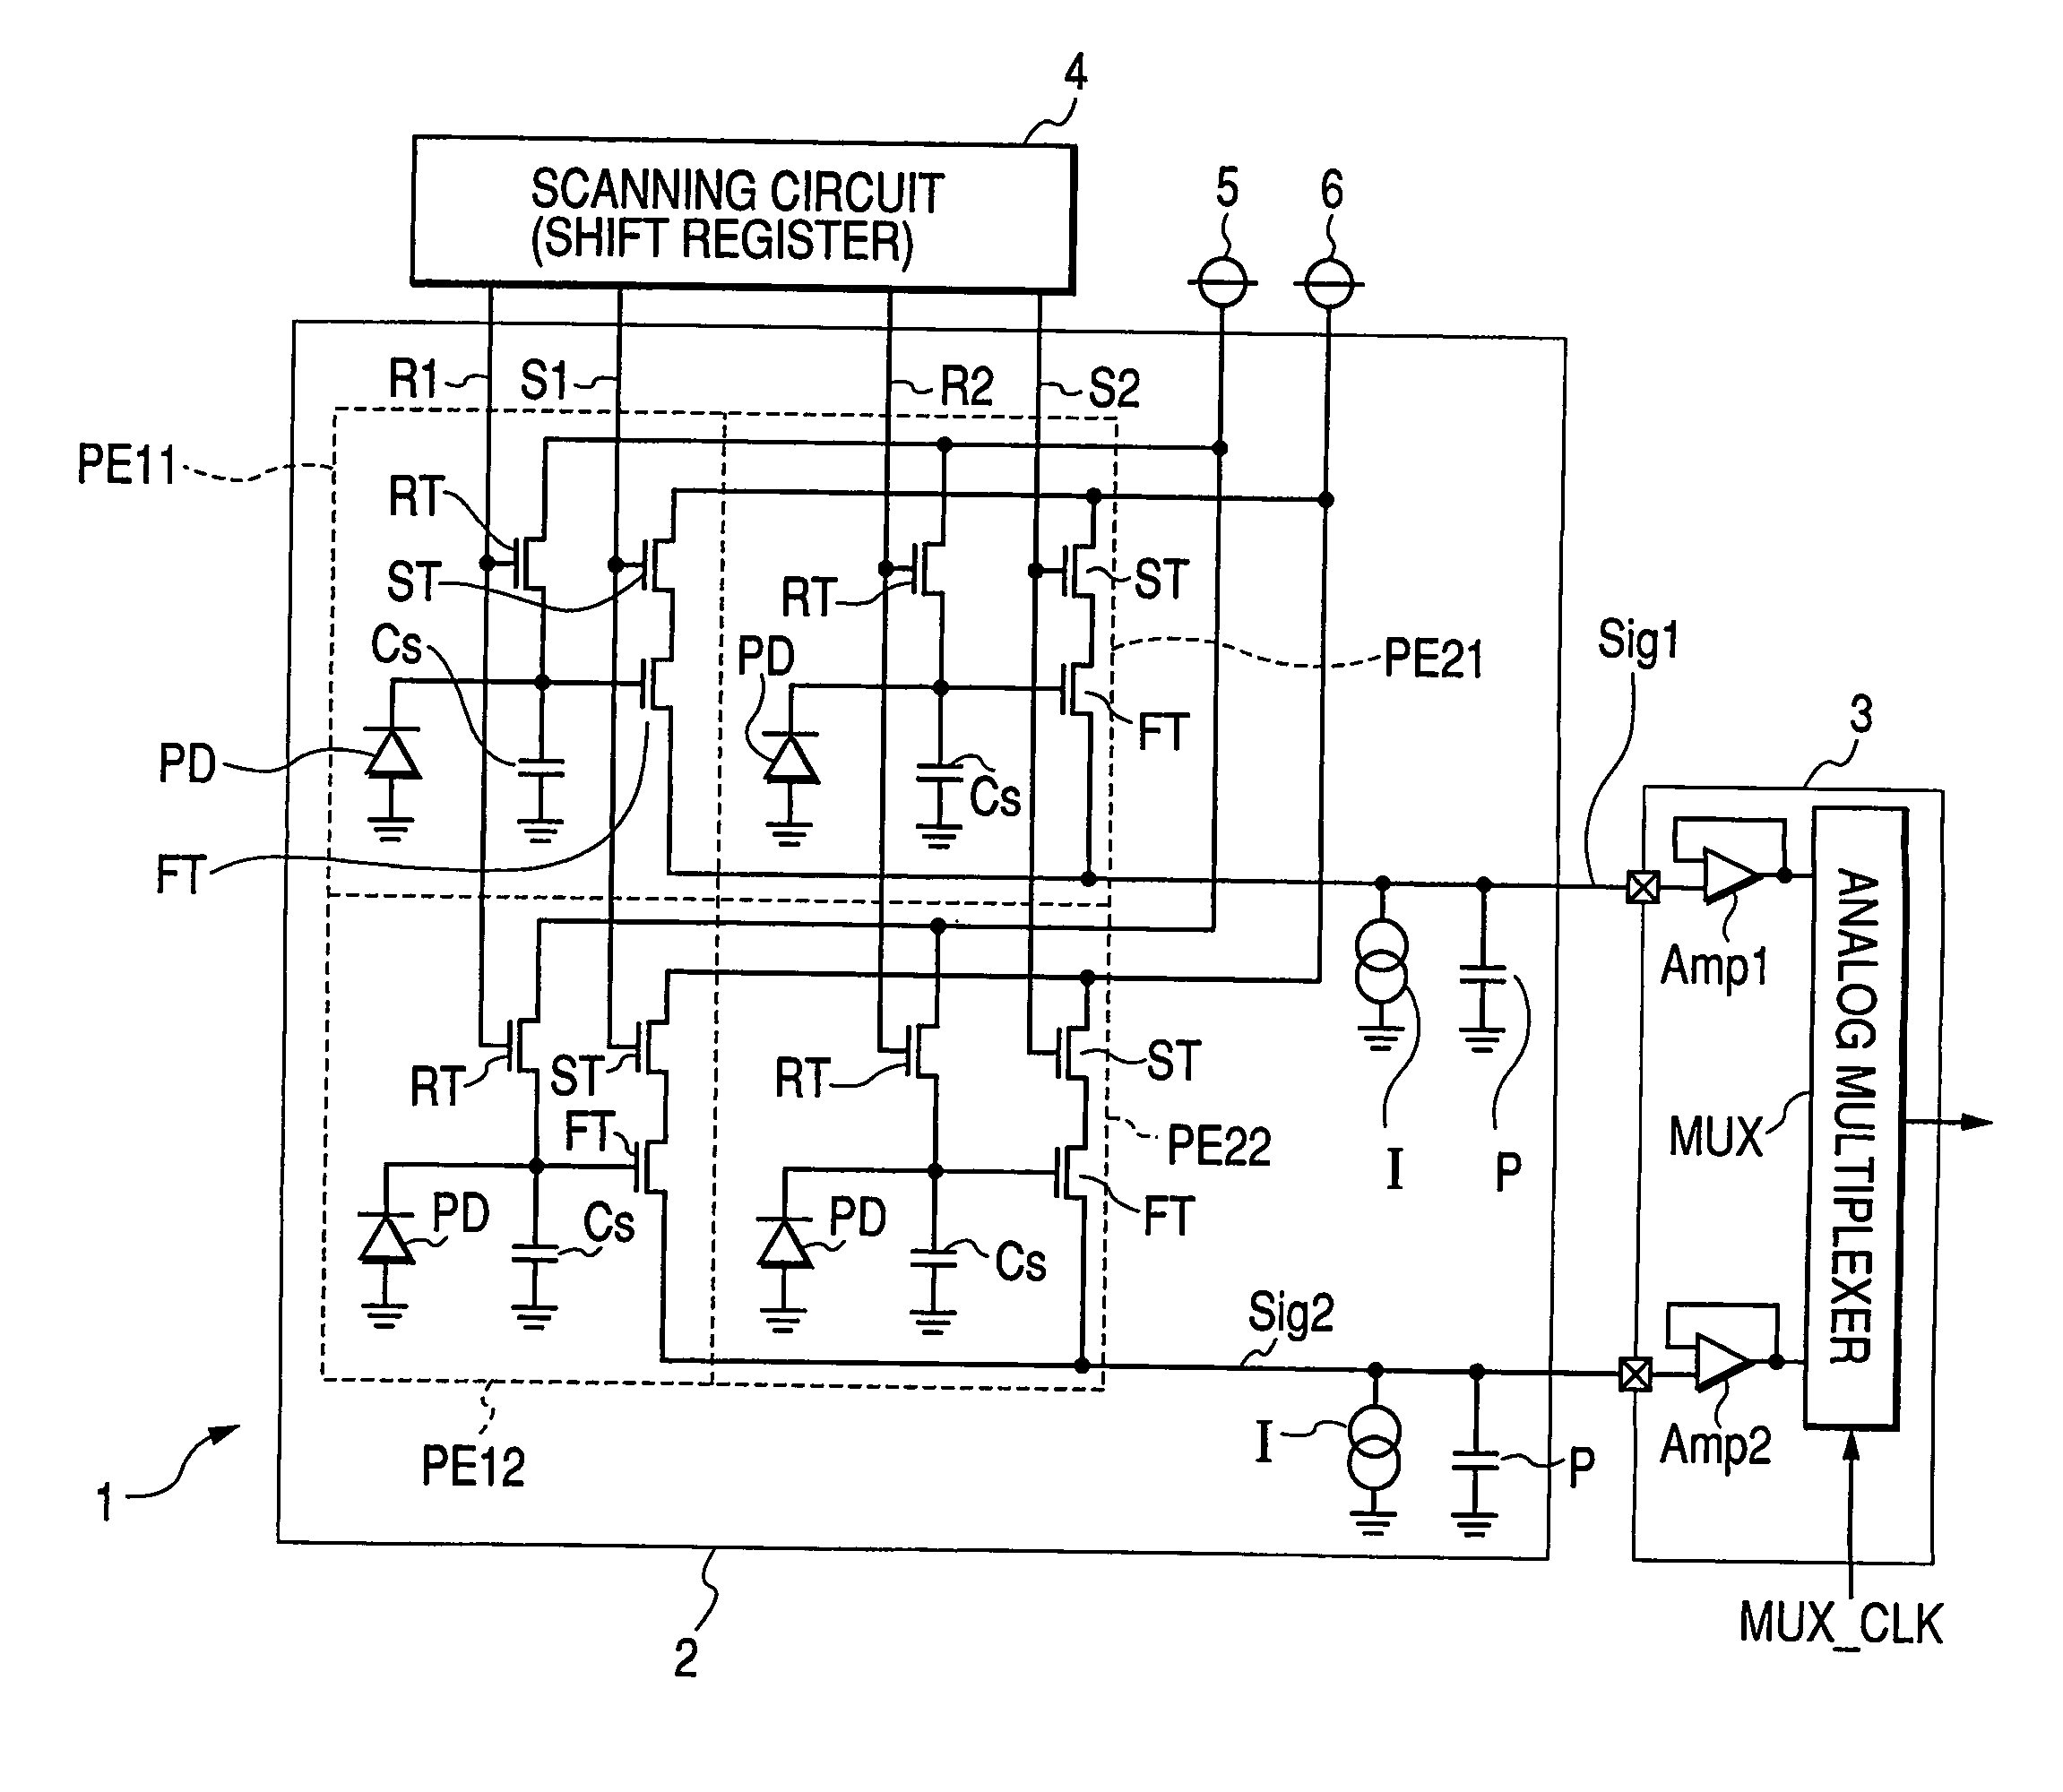 Photoelectric converting apparatus